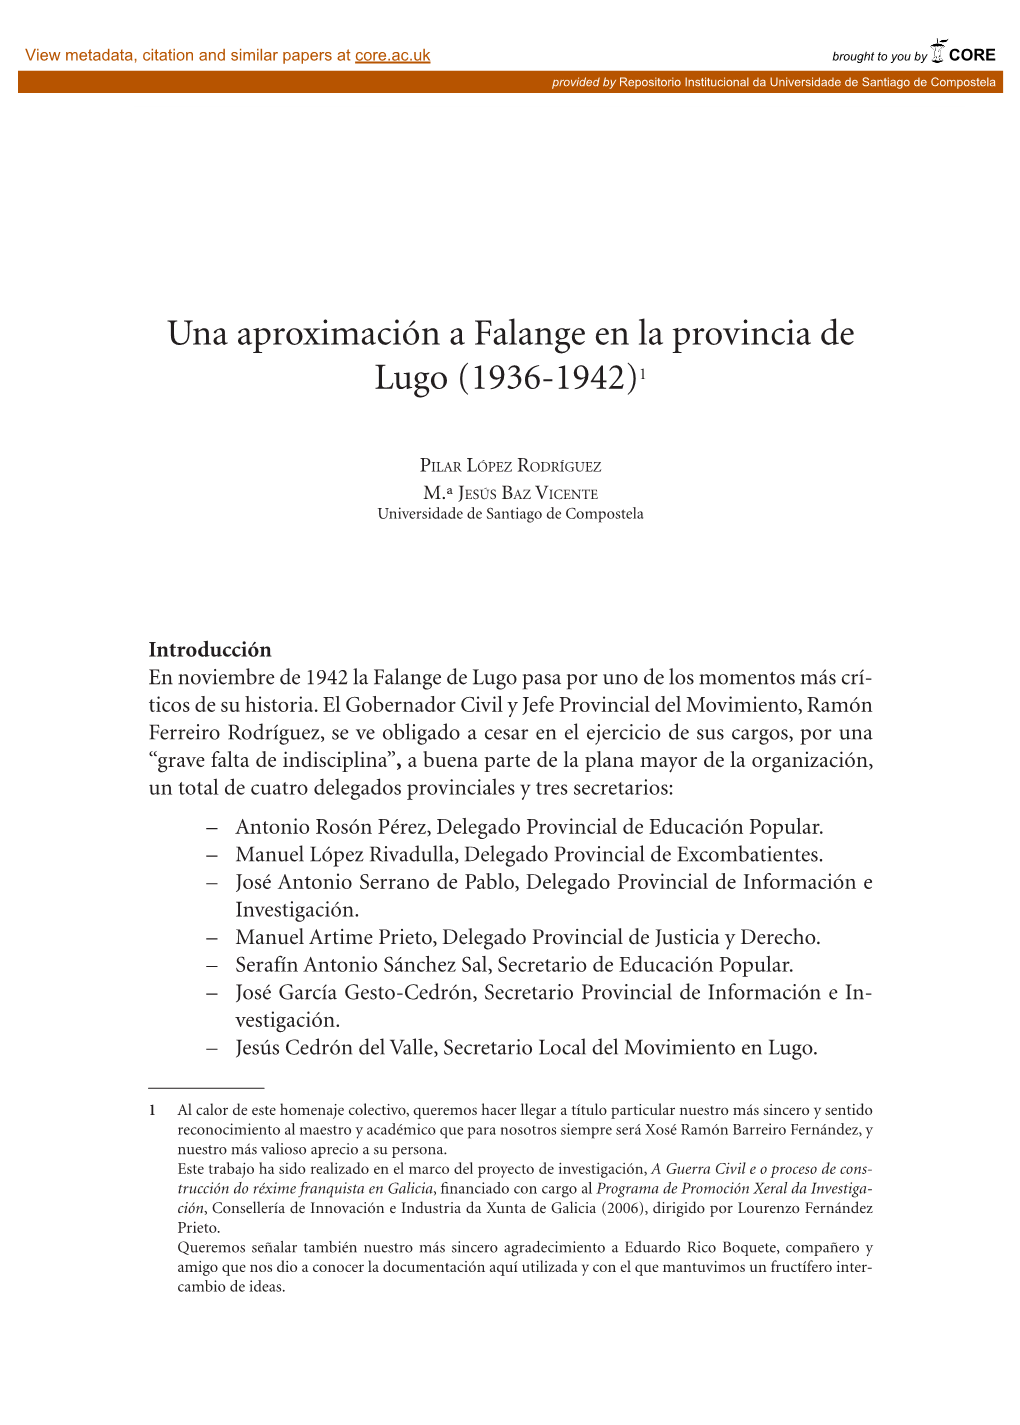 Una Aproximación a Falange En La Provincia De Lugo (1936-1942) 195 Pilar López Rodríguez E M.ª Jesús Baz Vicente